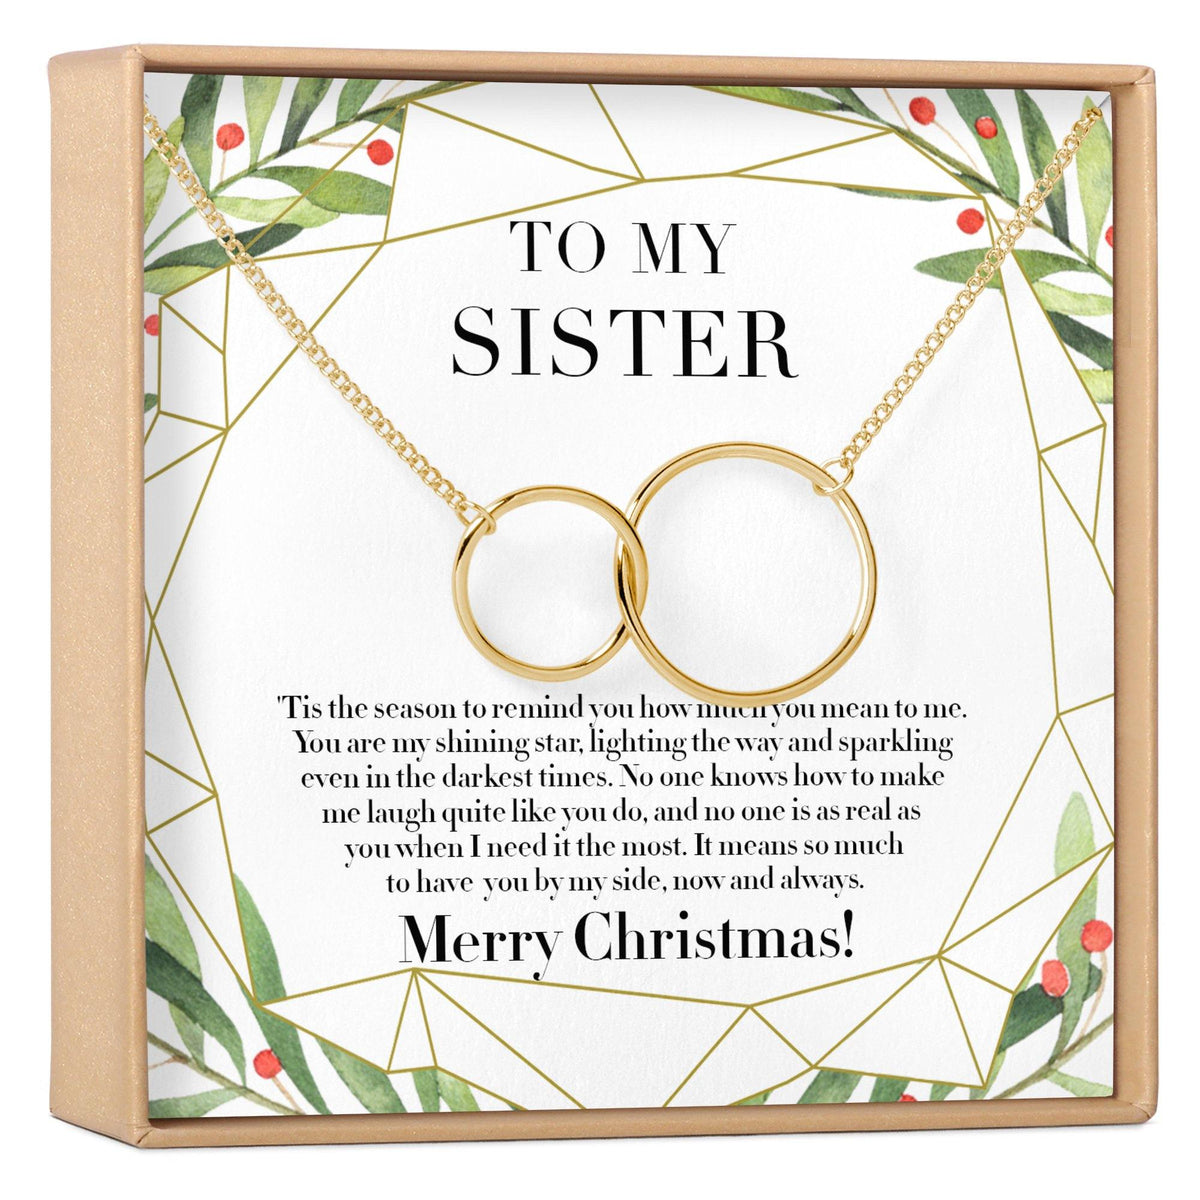 Little Sister Gift | Little Sister Gift From Big Brother | For Little Sister  | eBay